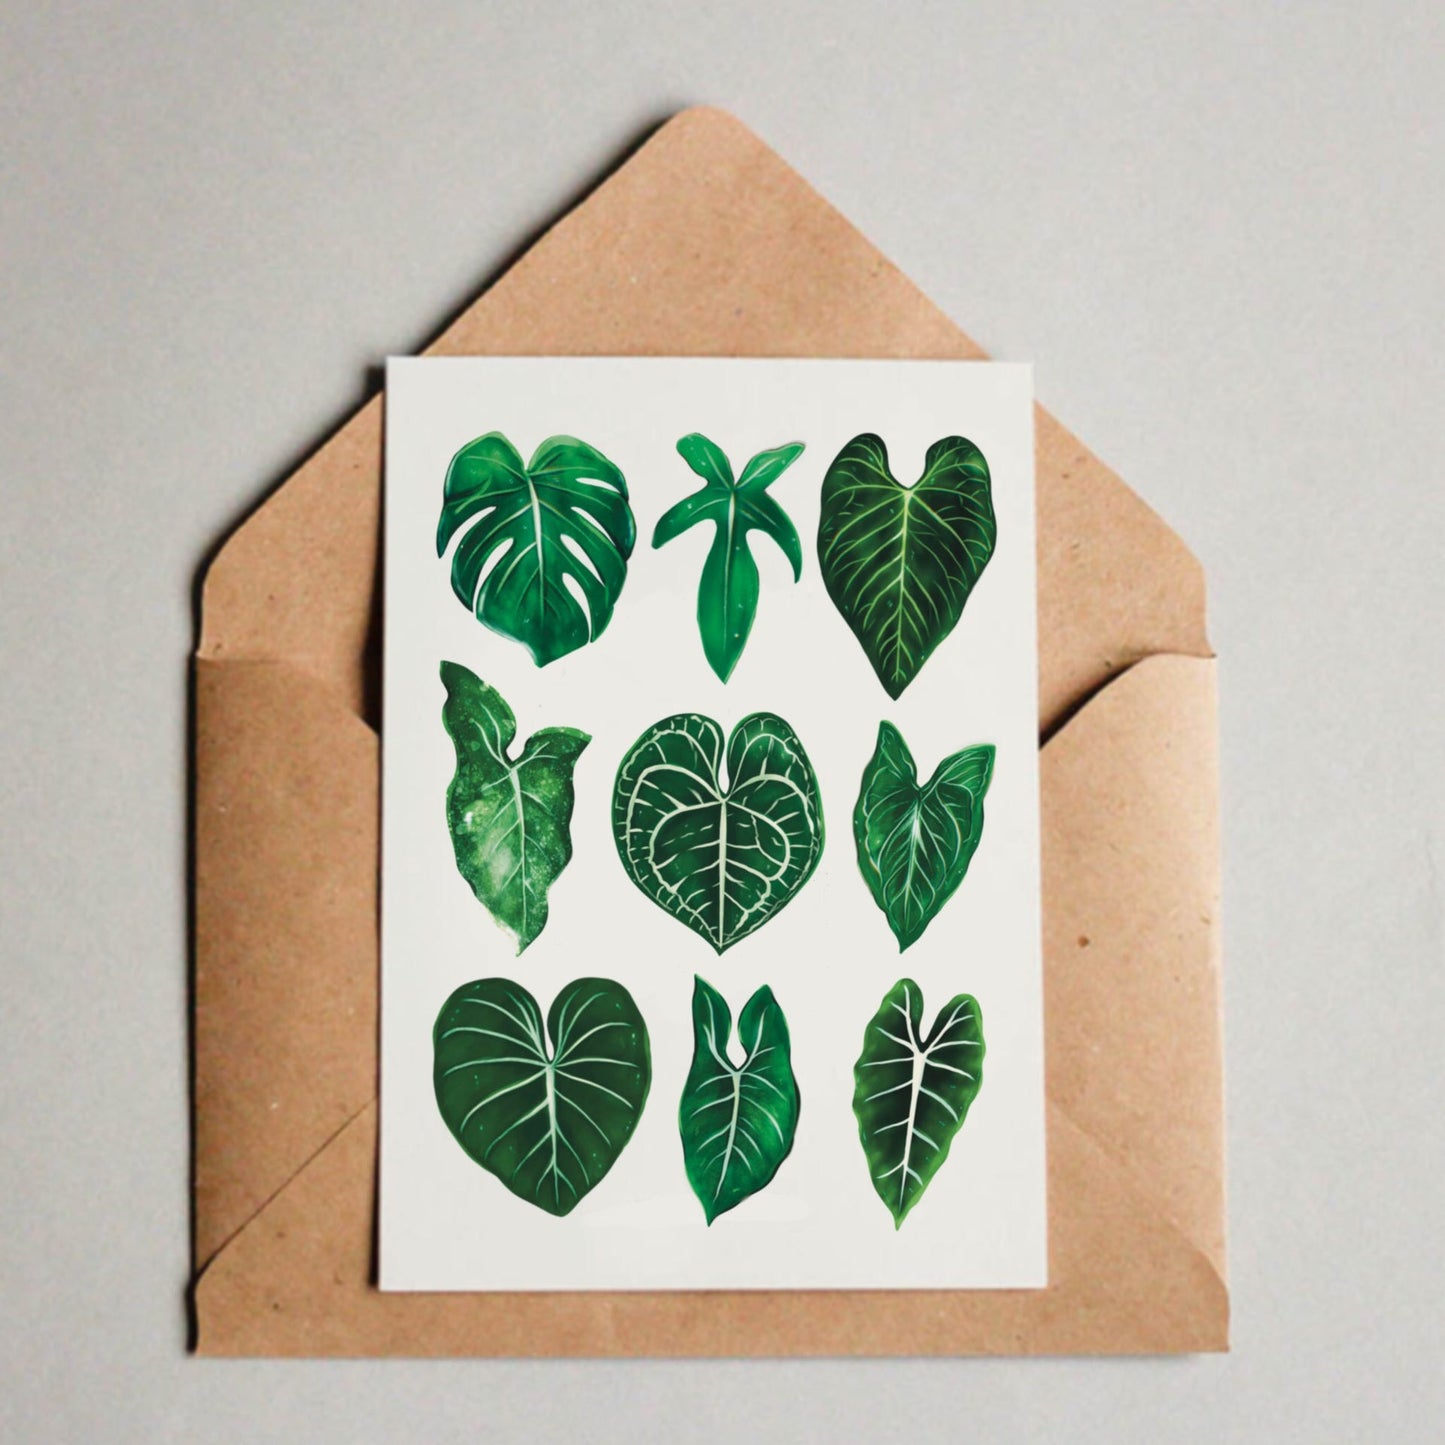 Postkarte mit unterschiedlichen Pflanzenmotiven: Monstera deliciosa, Philodendron Green, Anthurium, Syngonium, Anthurium Clarinervium, Philodendron Gloriosum, Alocasia Frydek.